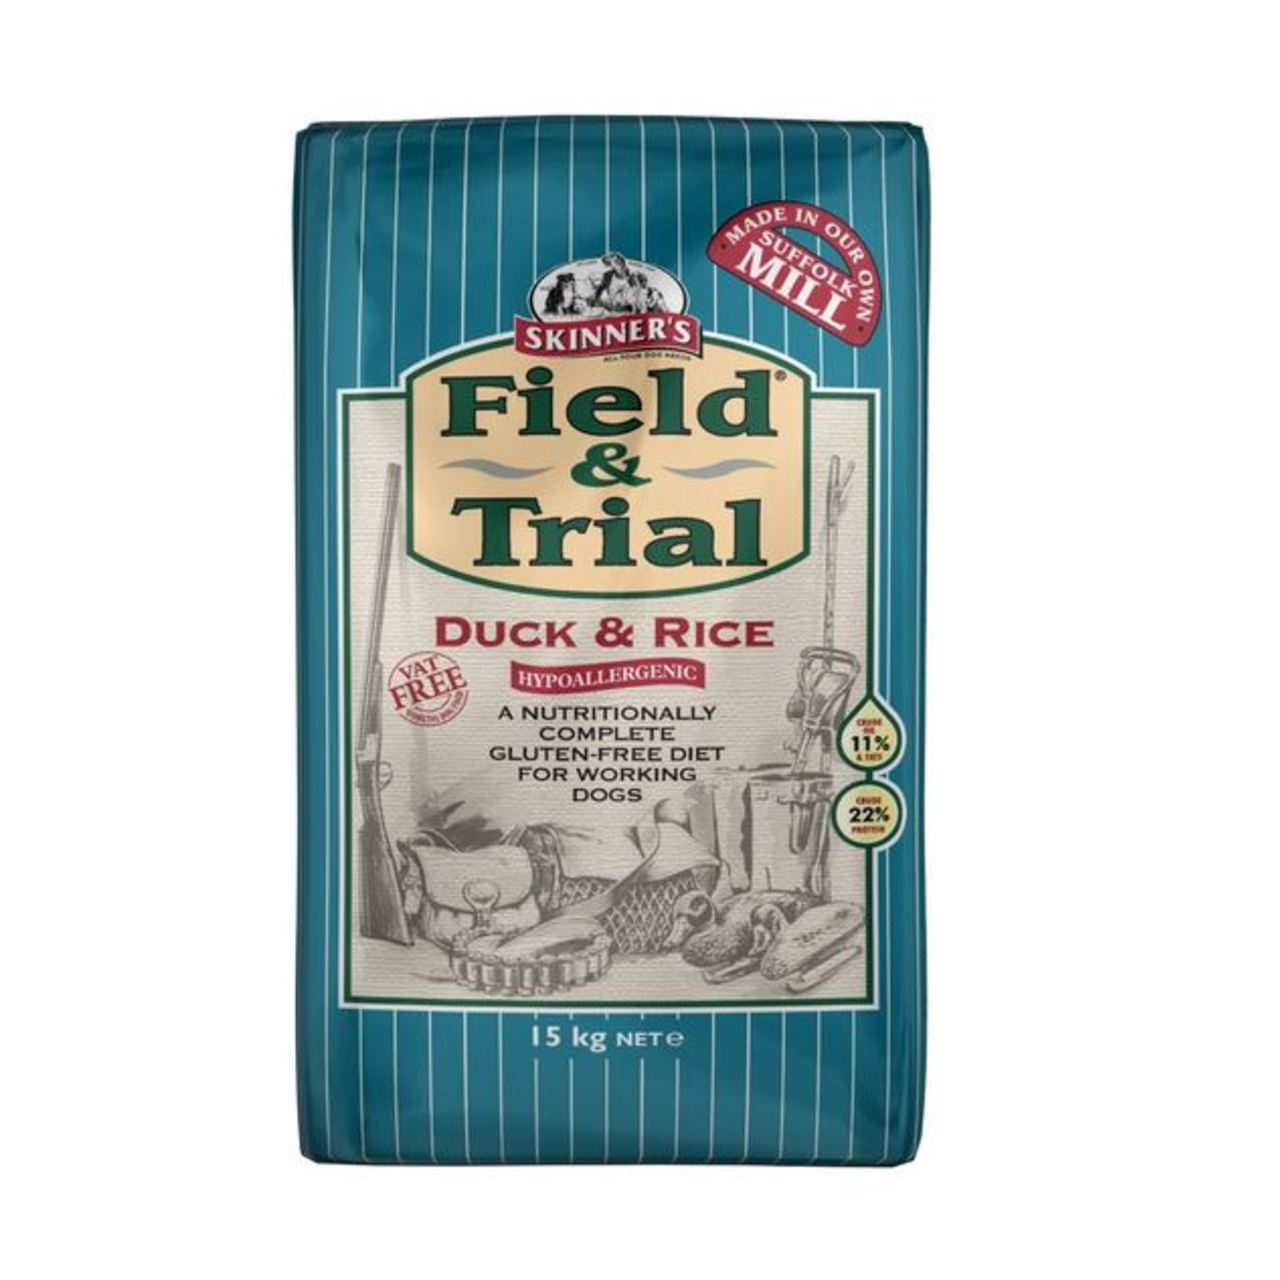 Skinners Field & Trial Duck & Rice Hypoallergenic 2.5kg